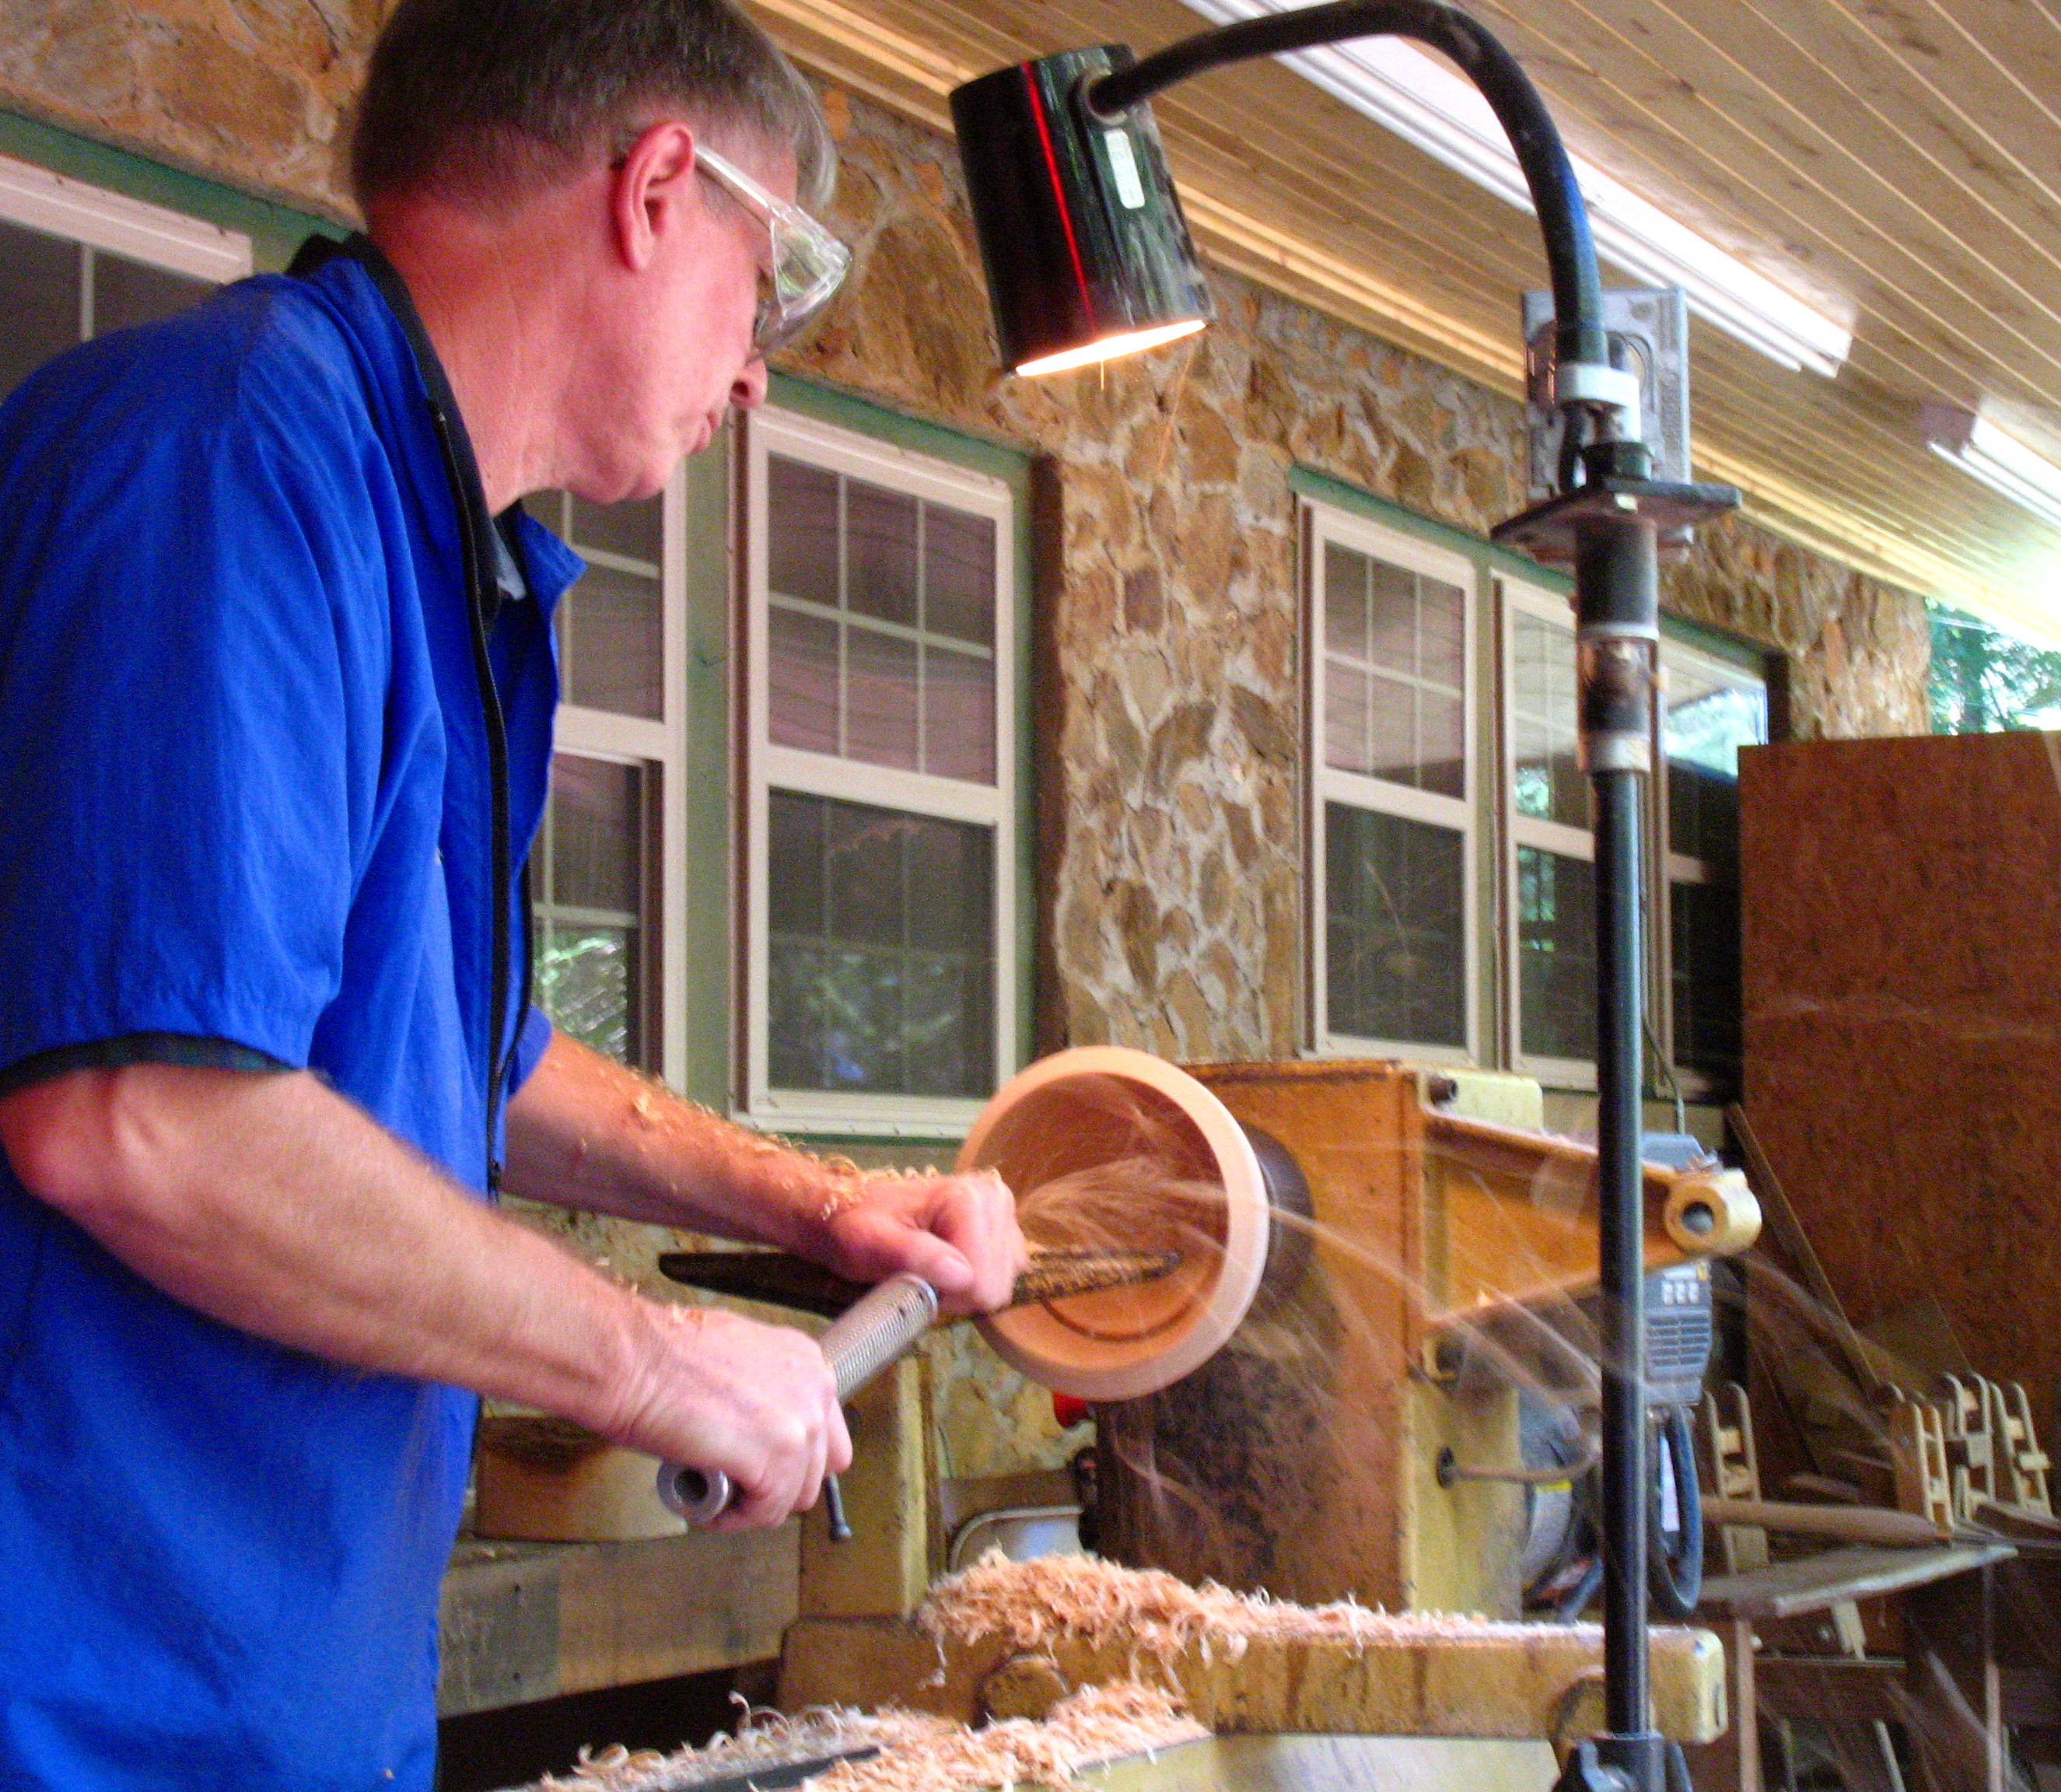 Woodturning demonstration